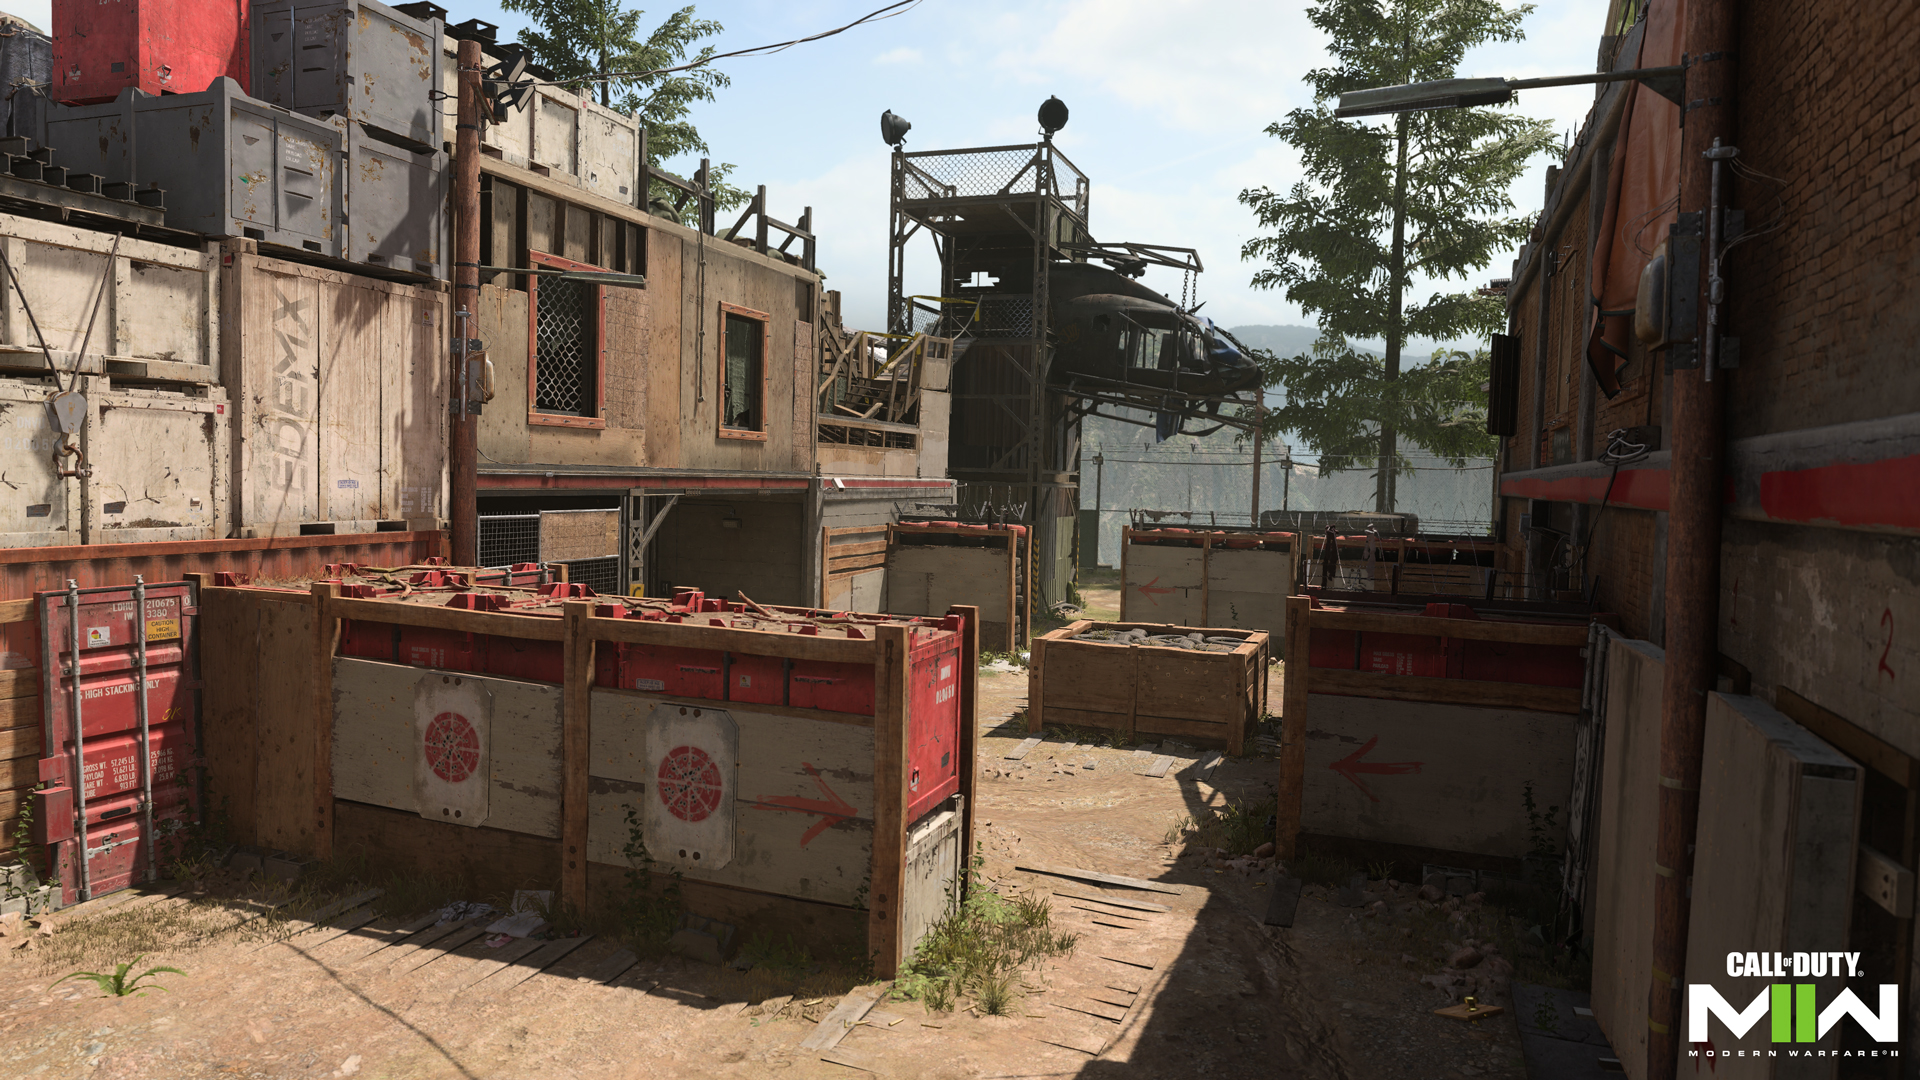 Shoot House map for Call of Duty: Modern Warfare 2